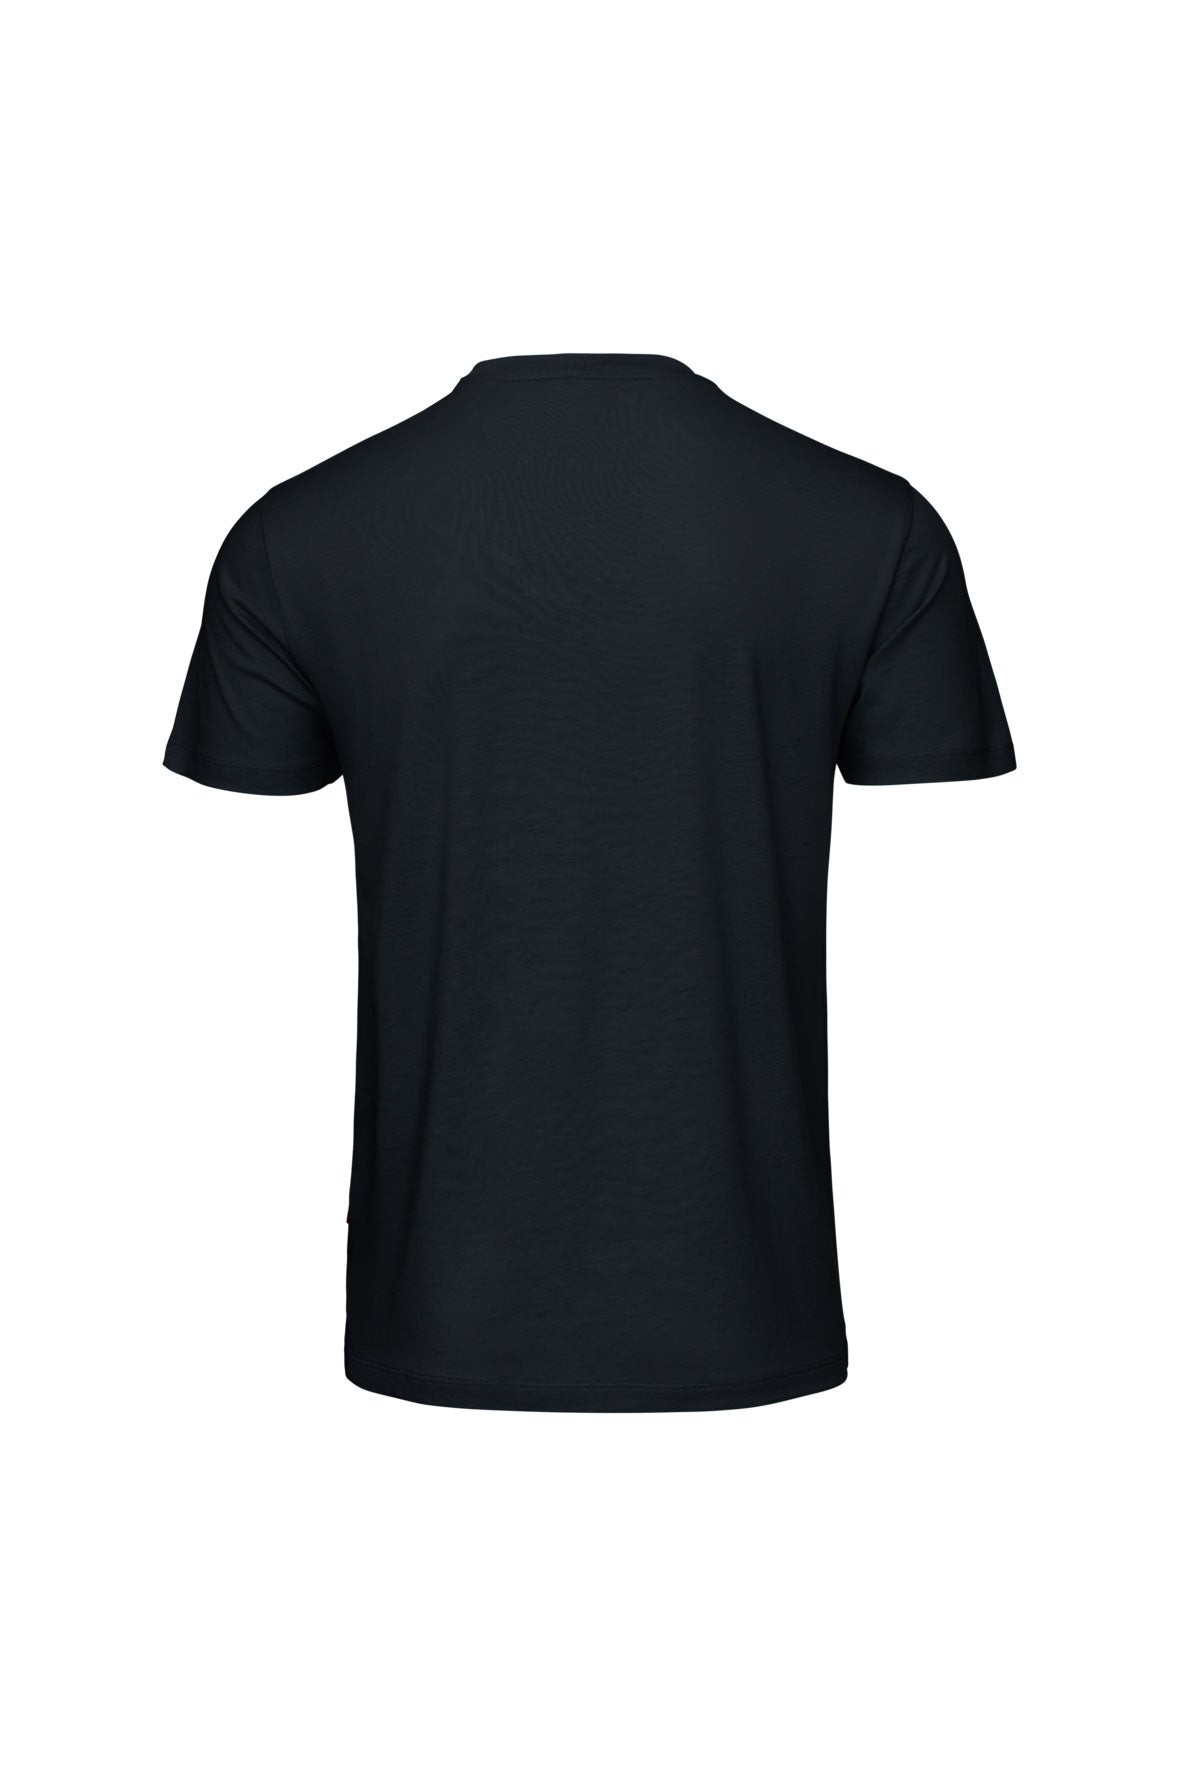 The Tencel T-shirt - Midnight Navy